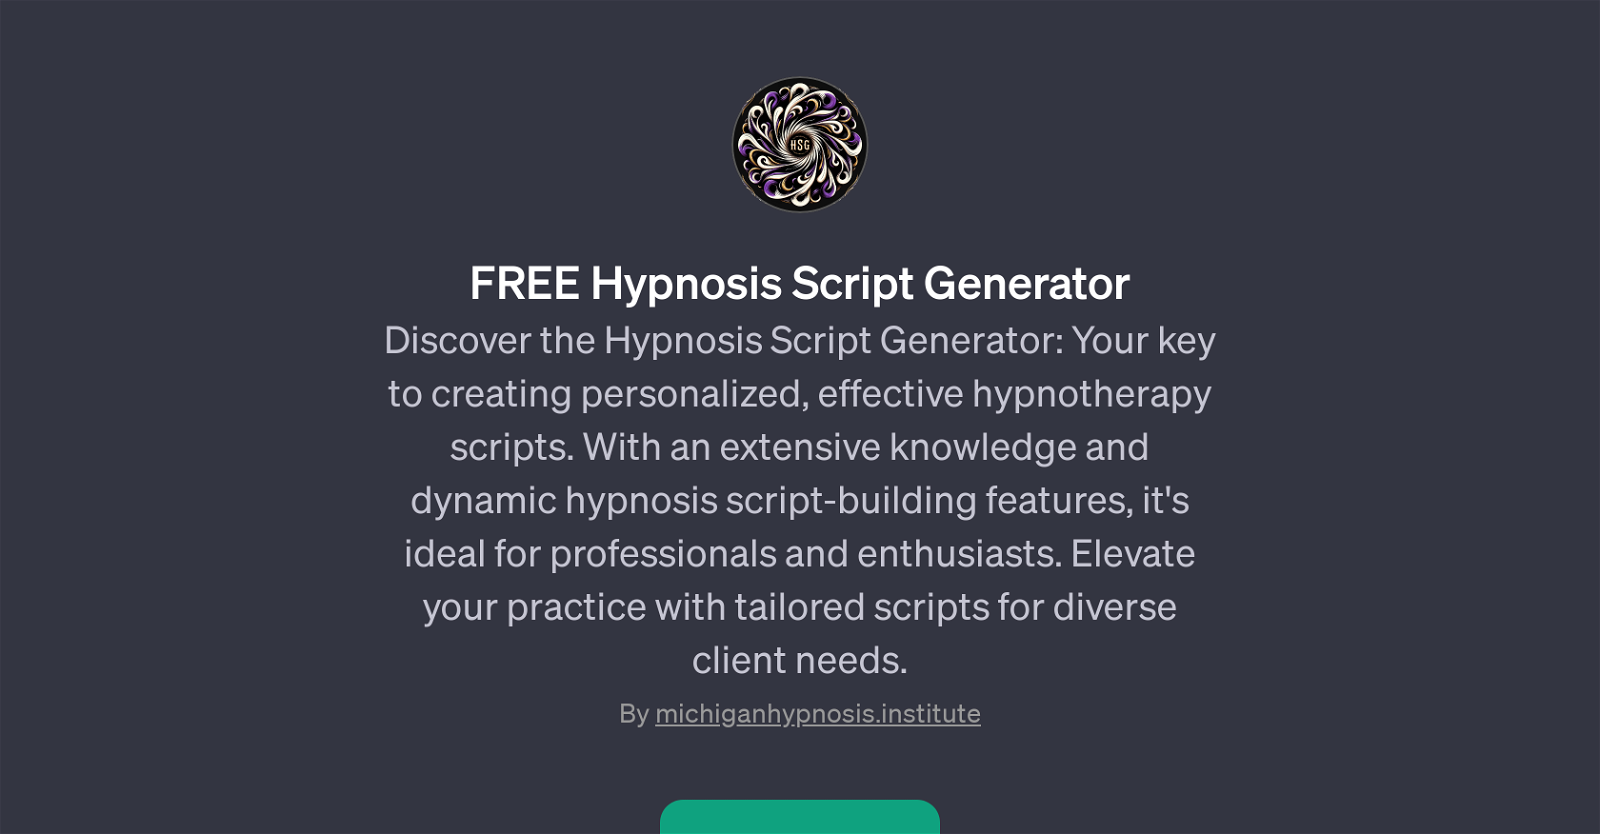 FREE Hypnosis Script Generator website